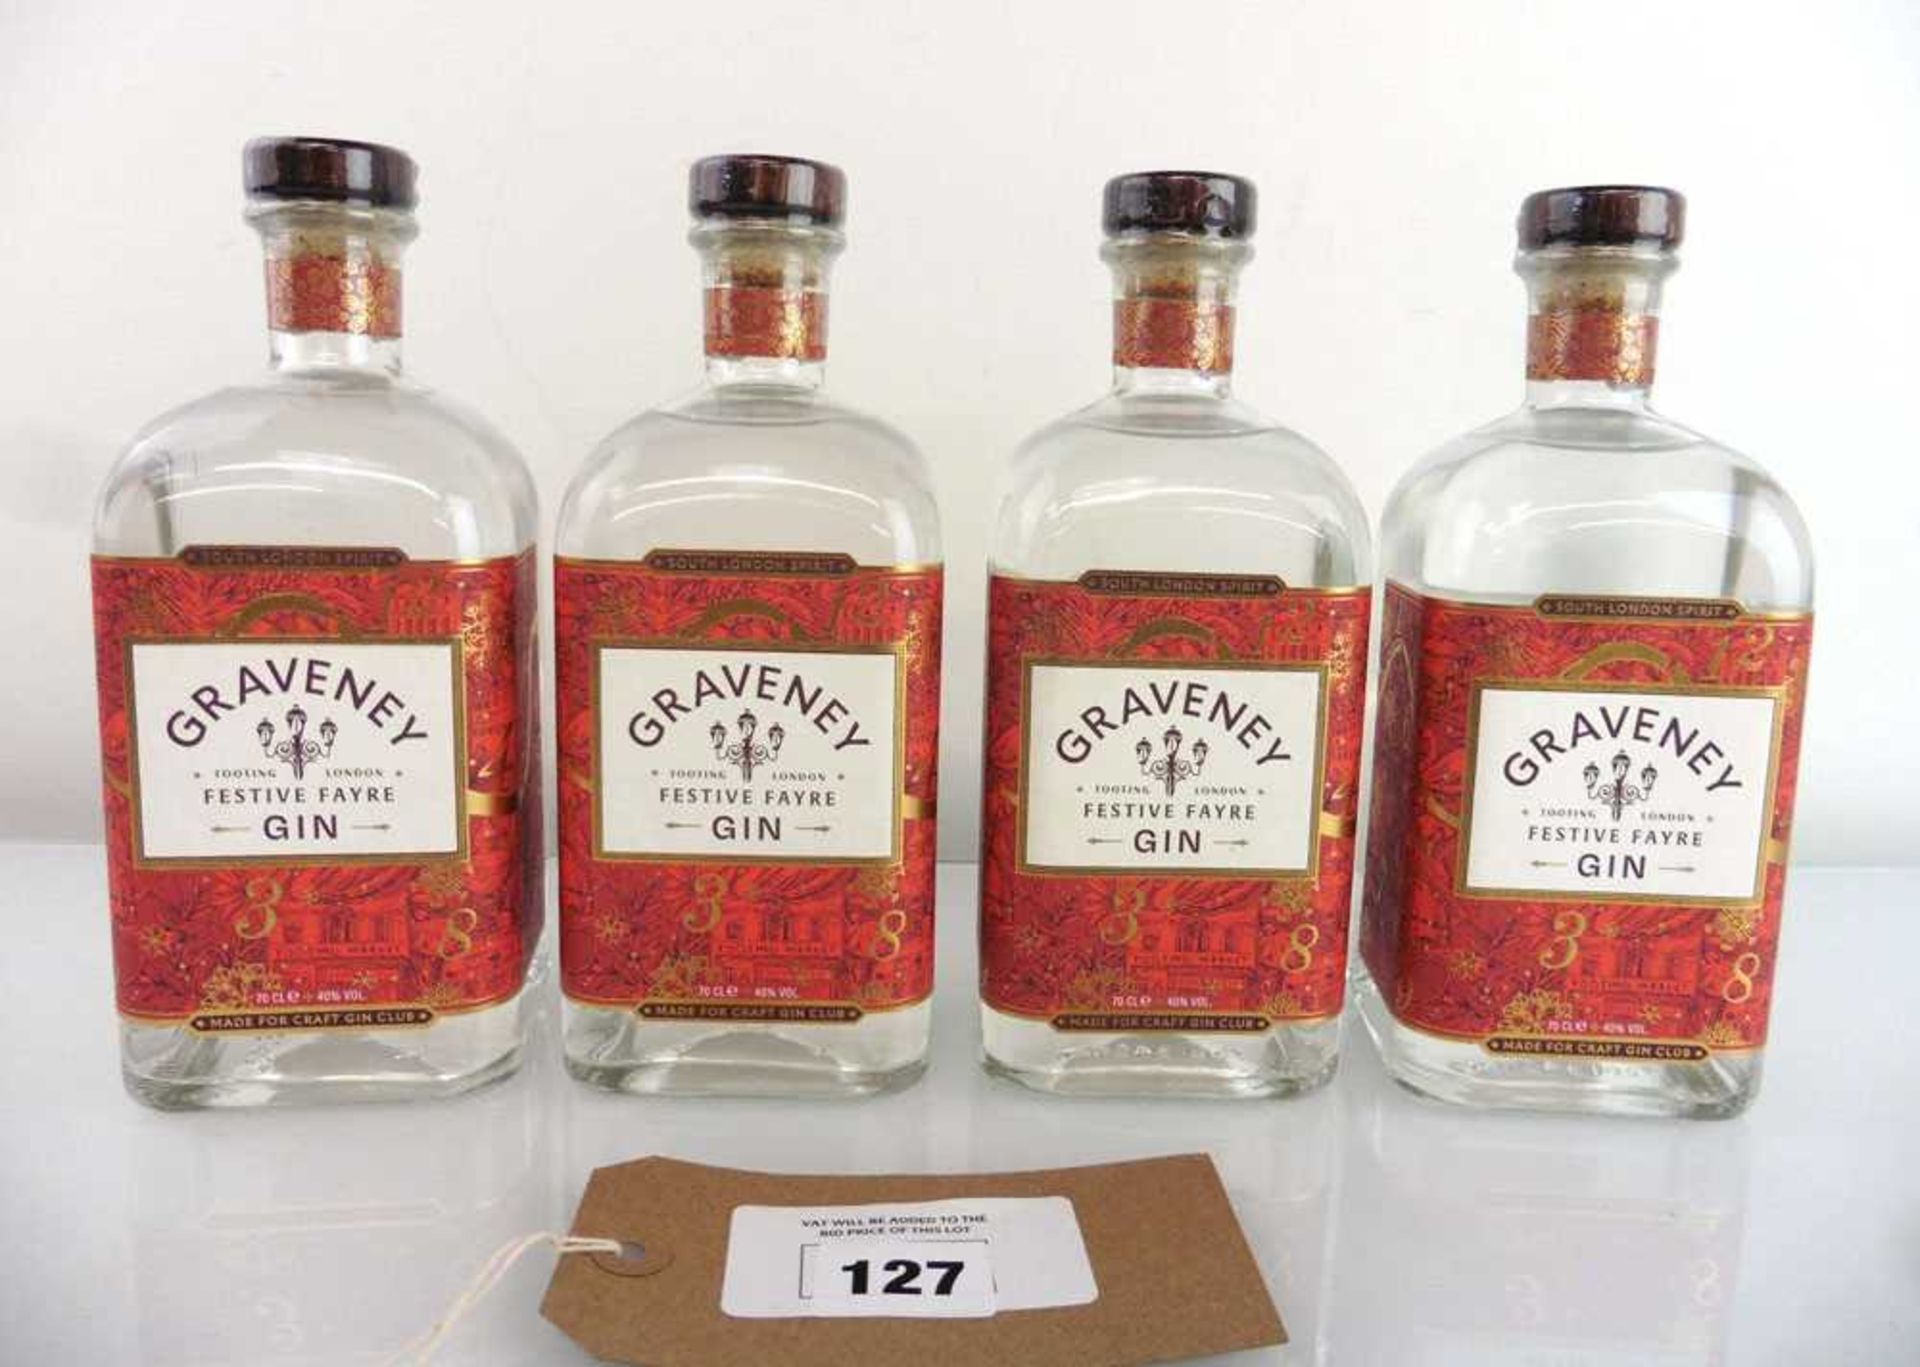 +VAT 4 bottles of Graveney Tooting London Festive Fayre Gin 70cl 40% (Note VAT added to bid price)